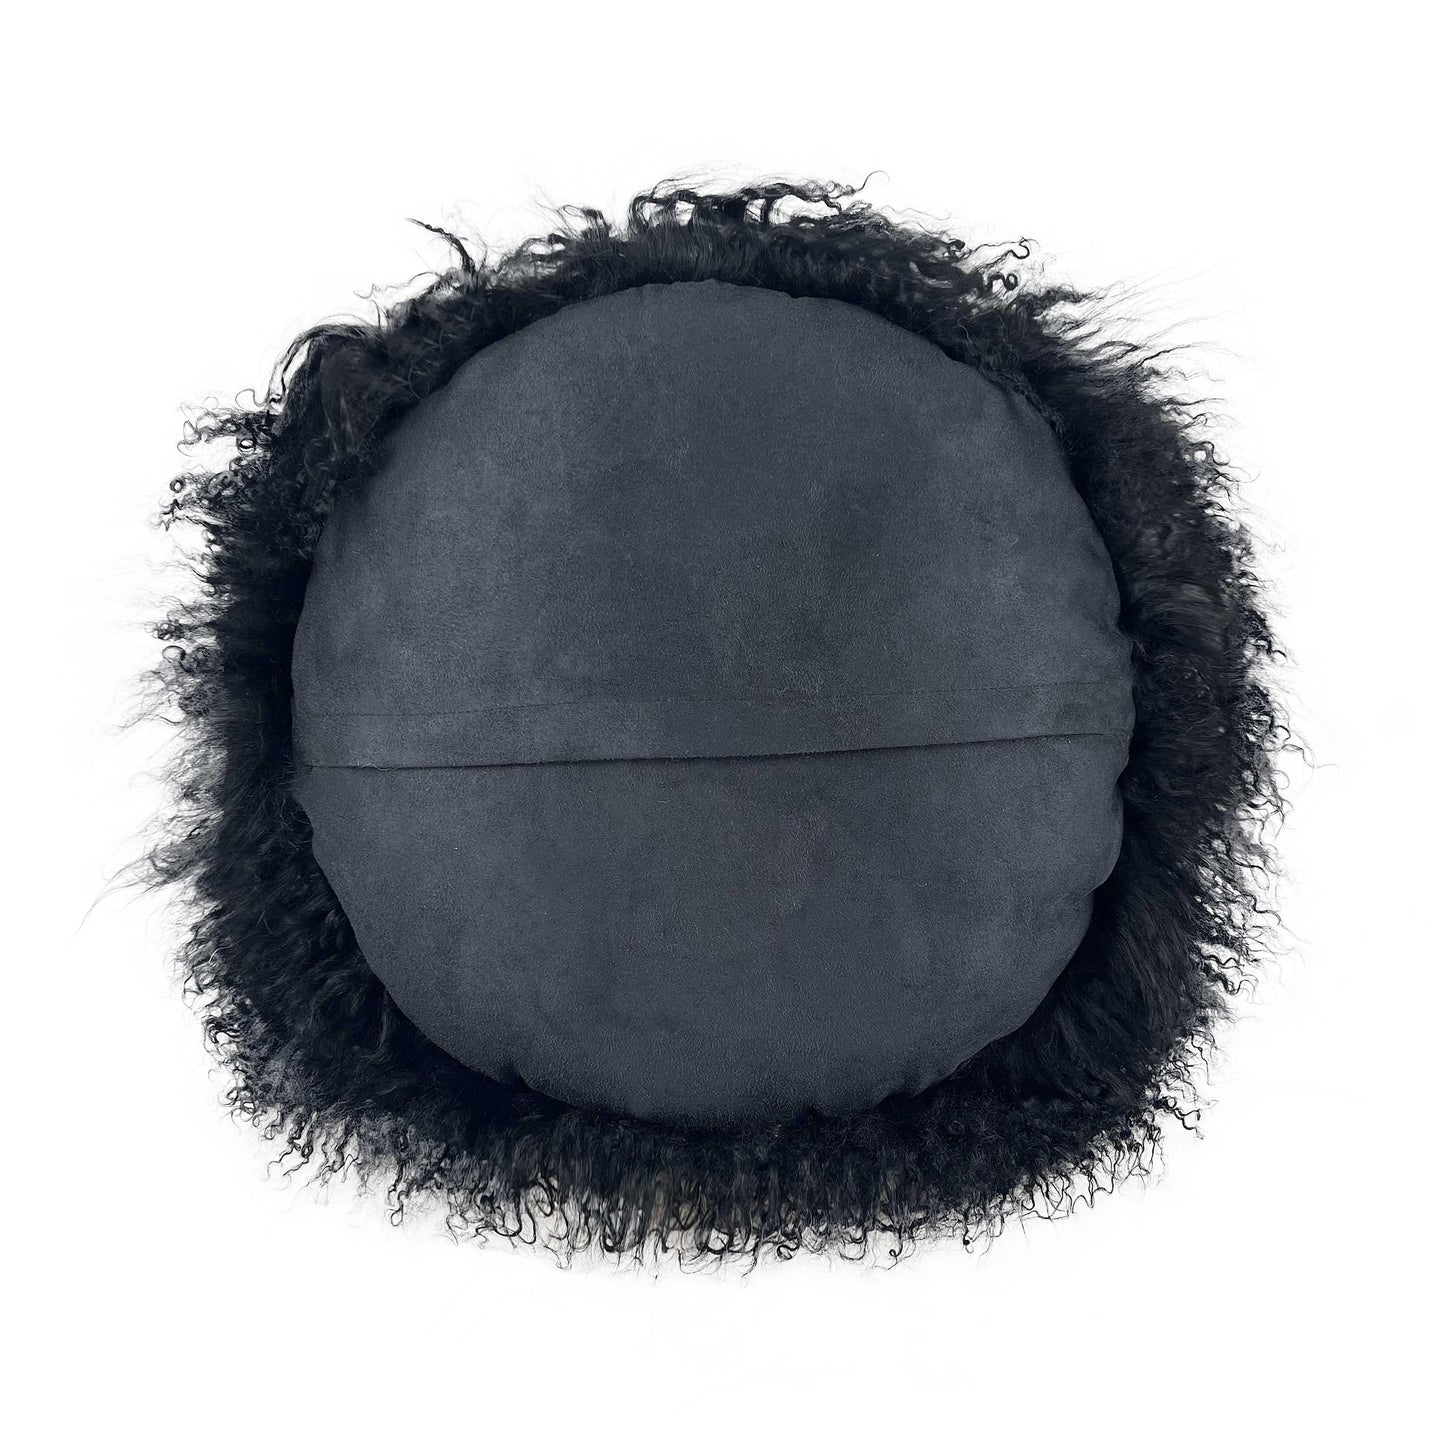 gloria zealand black sheepskin 16 inch round pillow